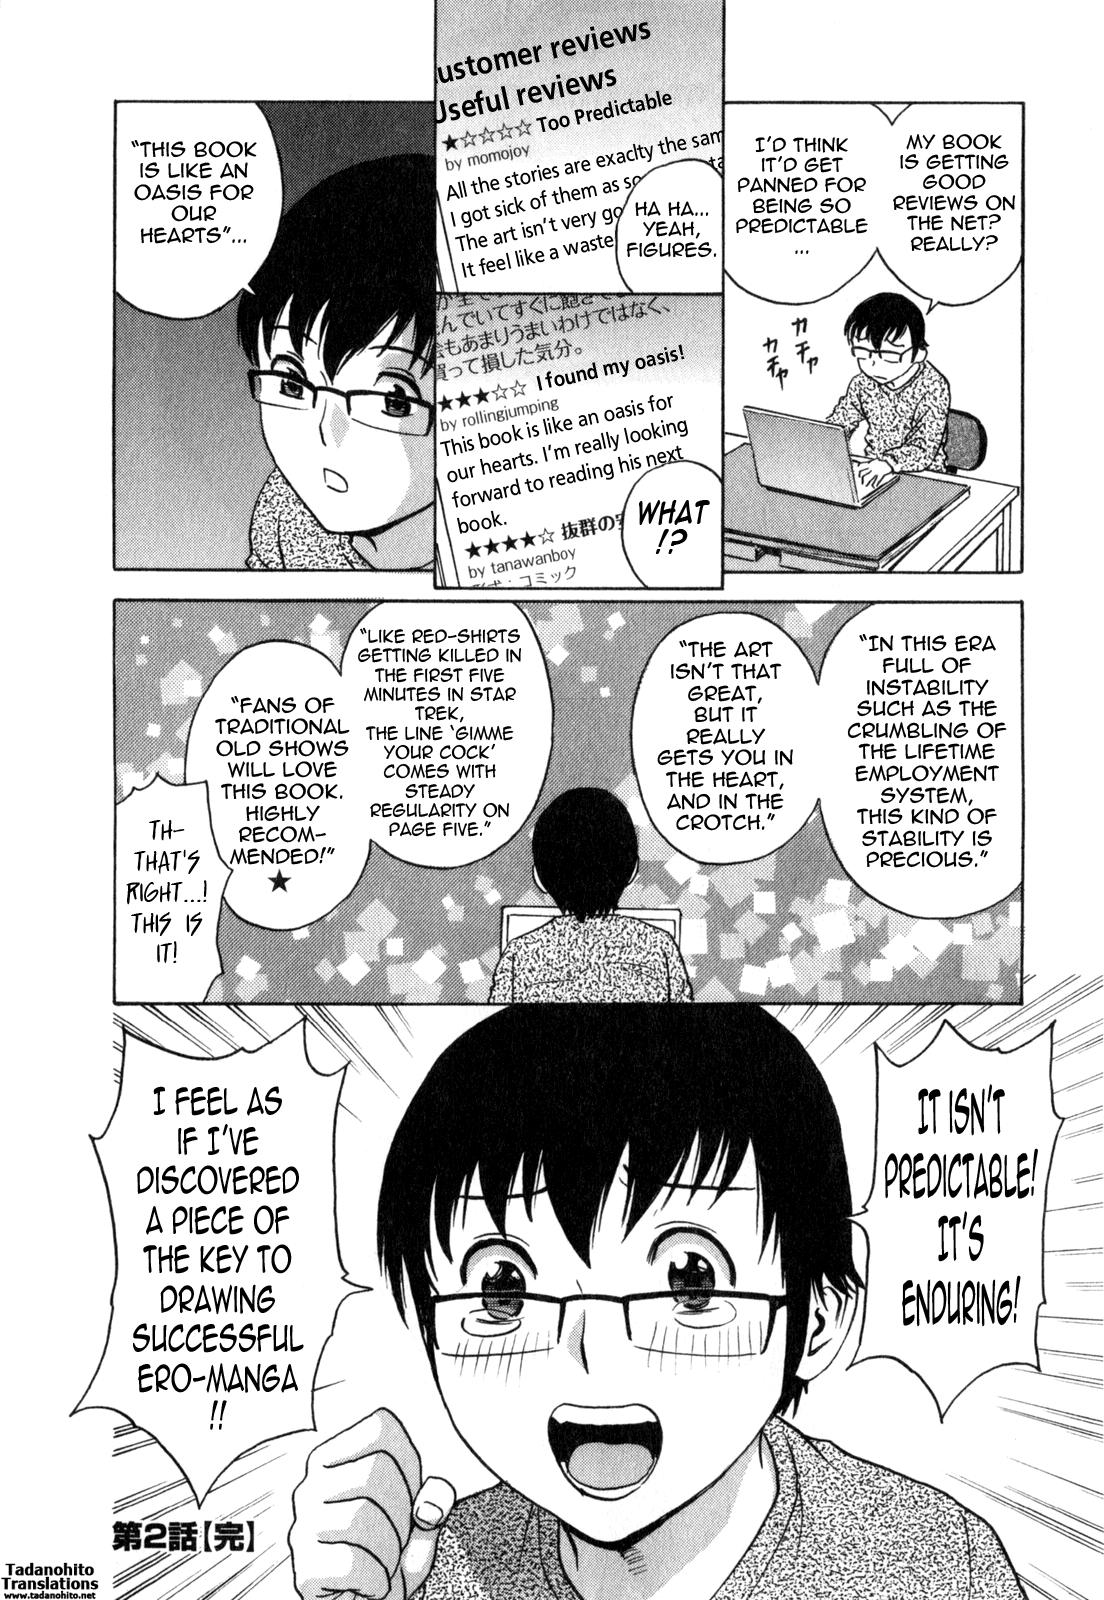 [Hidemaru] Life with Married Women Just Like a Manga 3 - Ch. 1-2 [English] {Tadanohito} 44